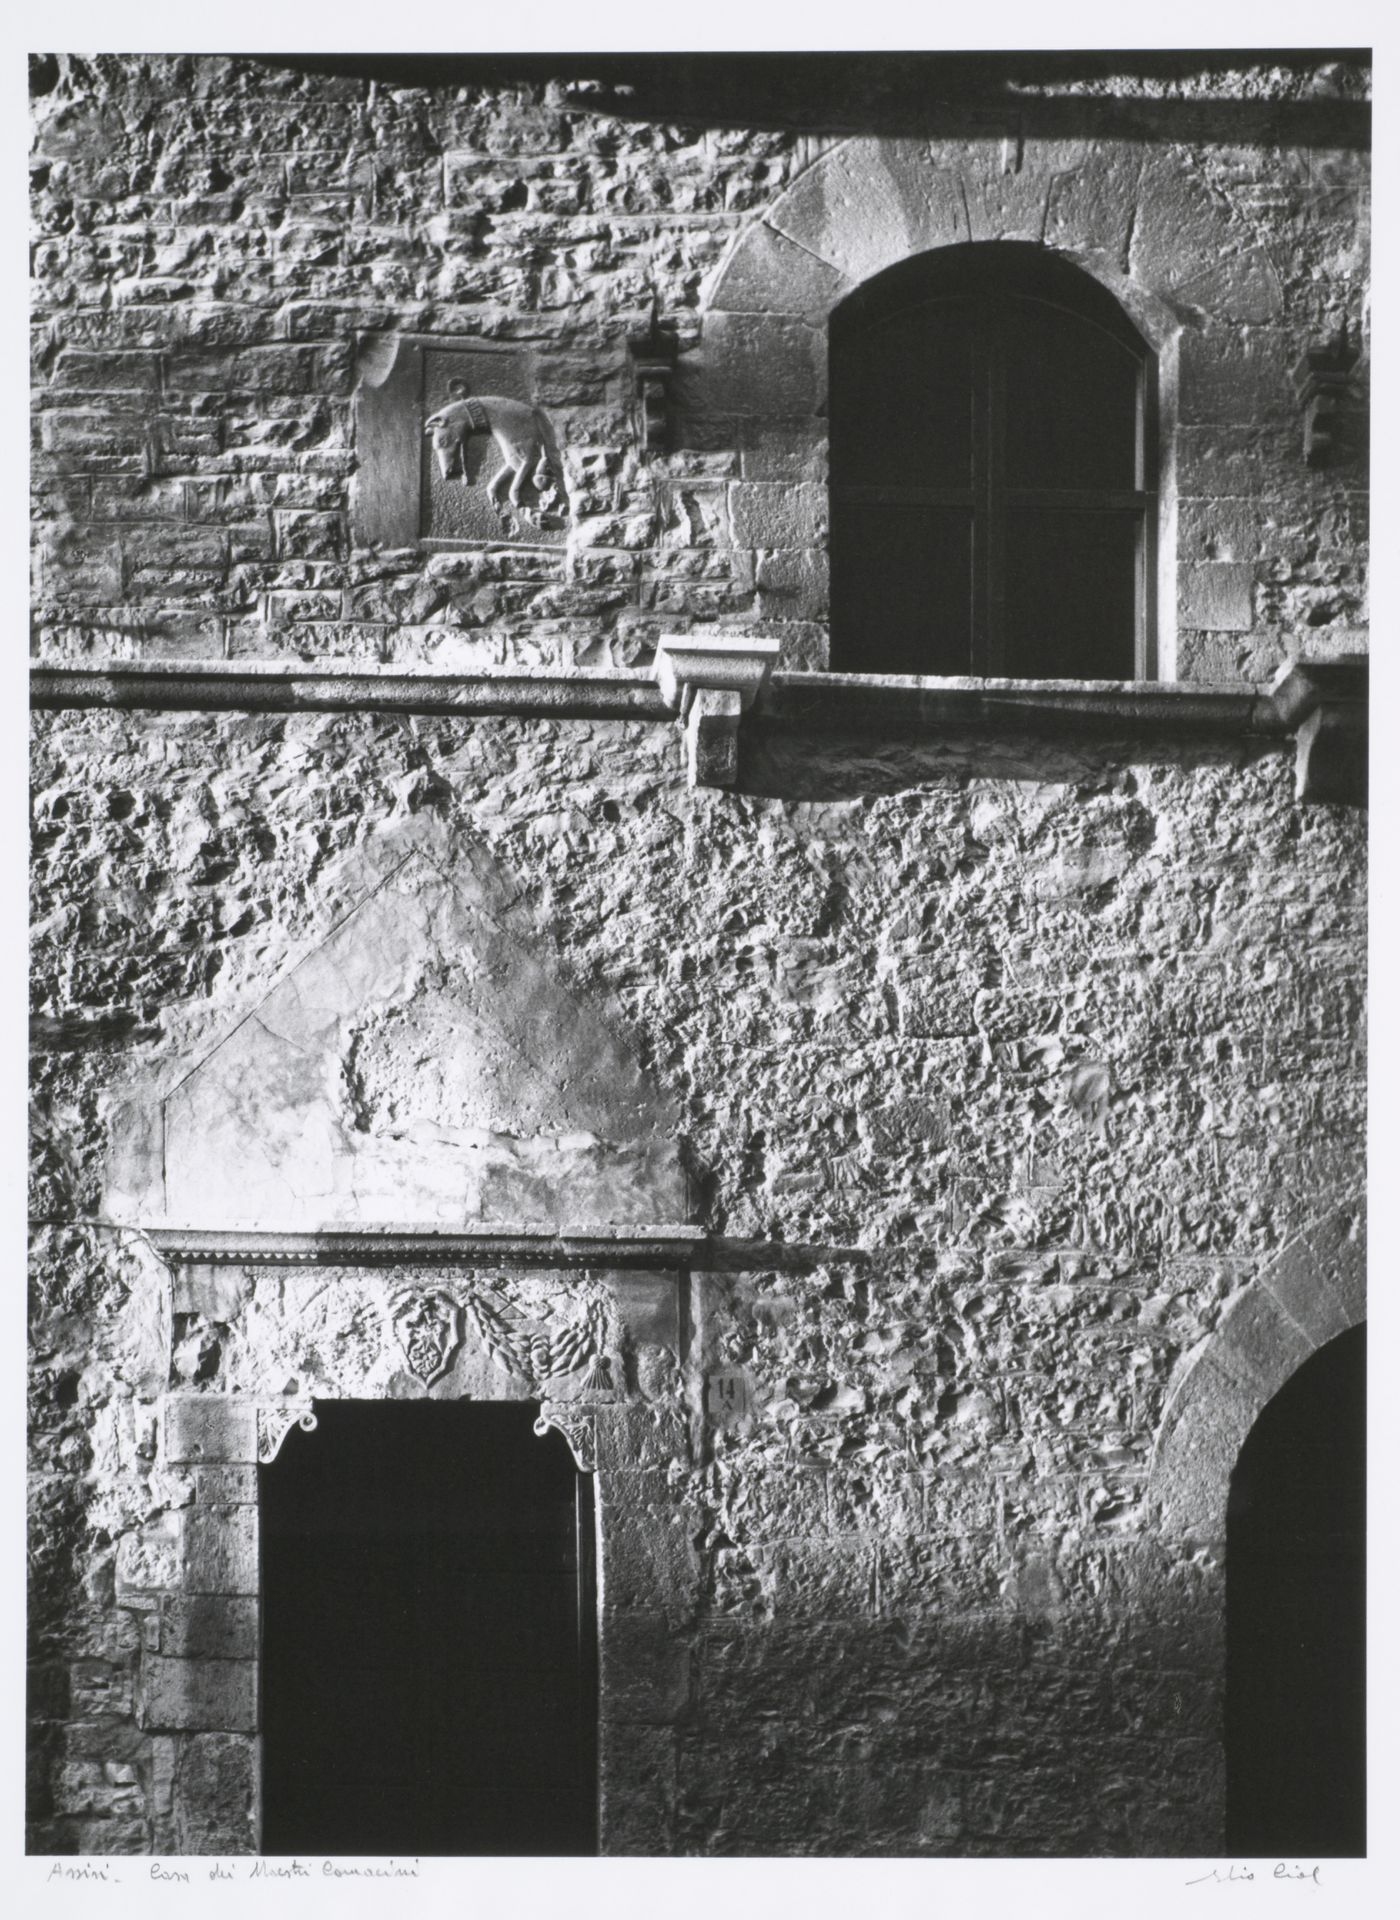 Casa dei Maestri Comacini, detail of façade, Assisi, Italy